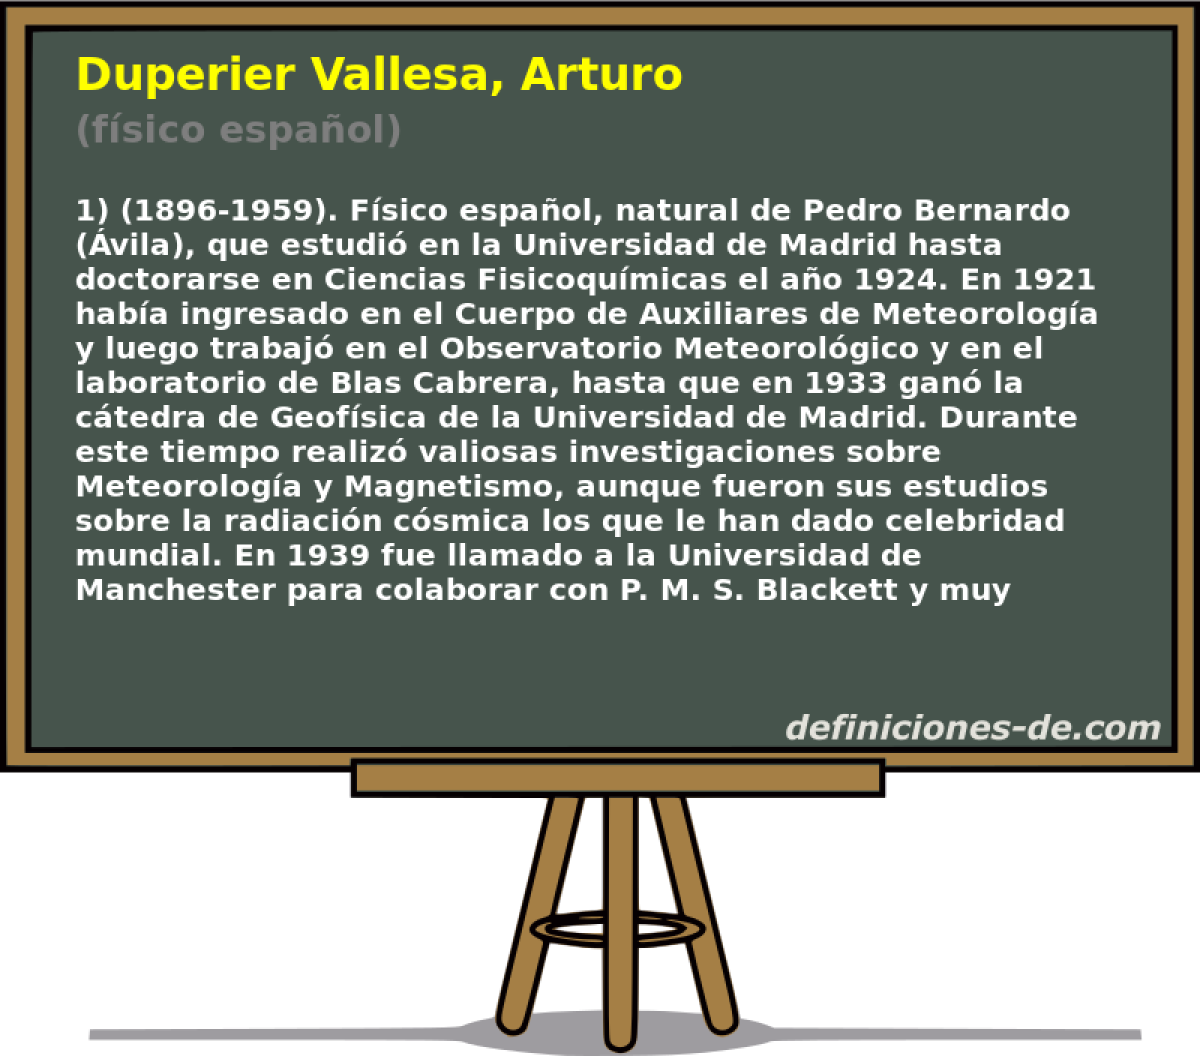 Duperier Vallesa, Arturo (fsico espaol)